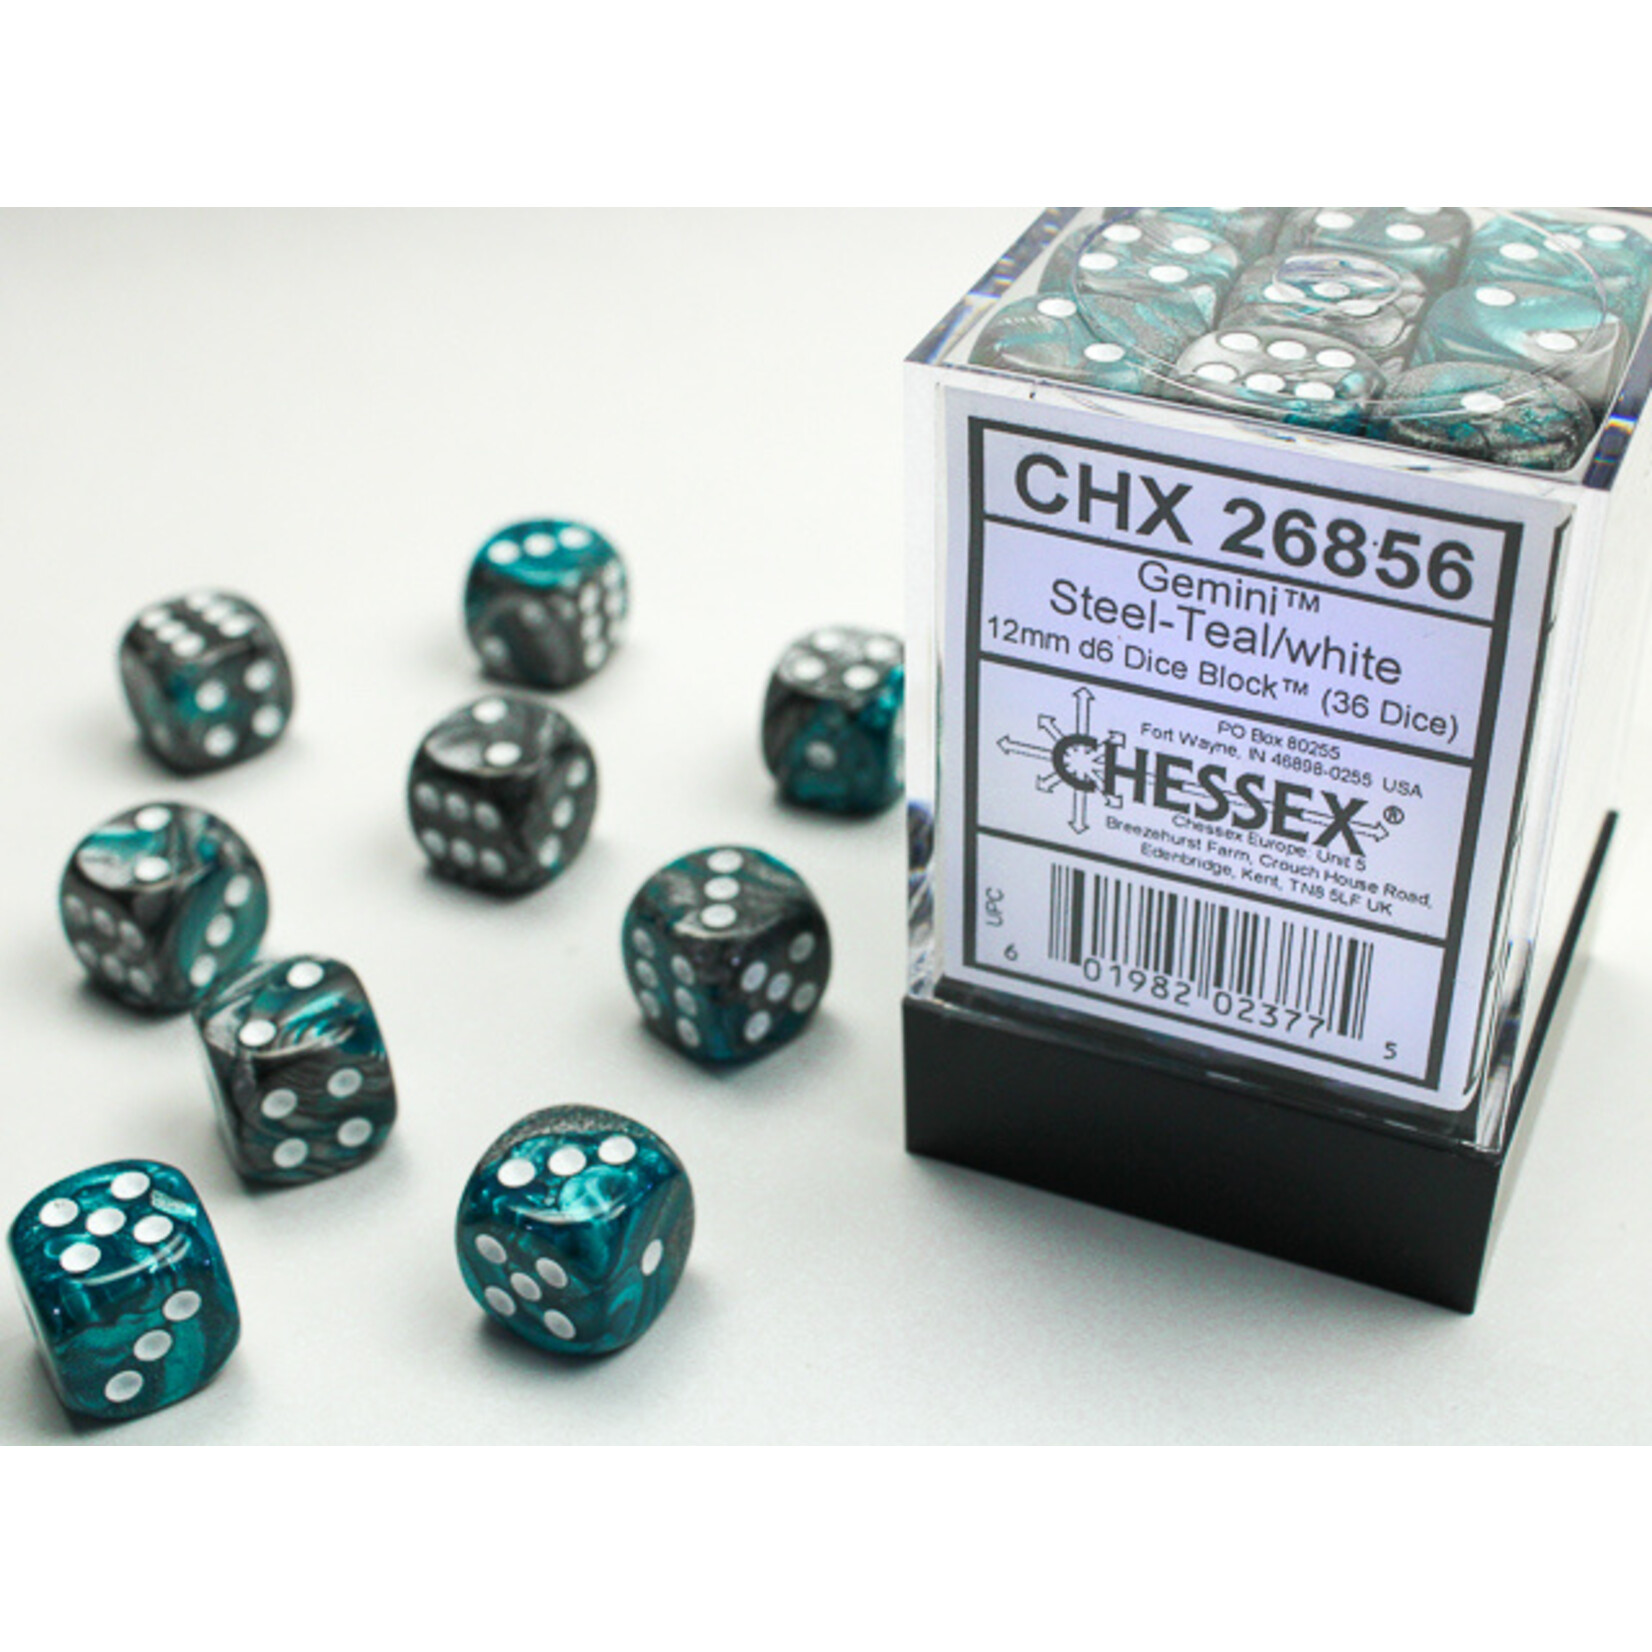 Chessex Chessex 36 x D6 Set Gemini 12mm - Steel-Teal/White